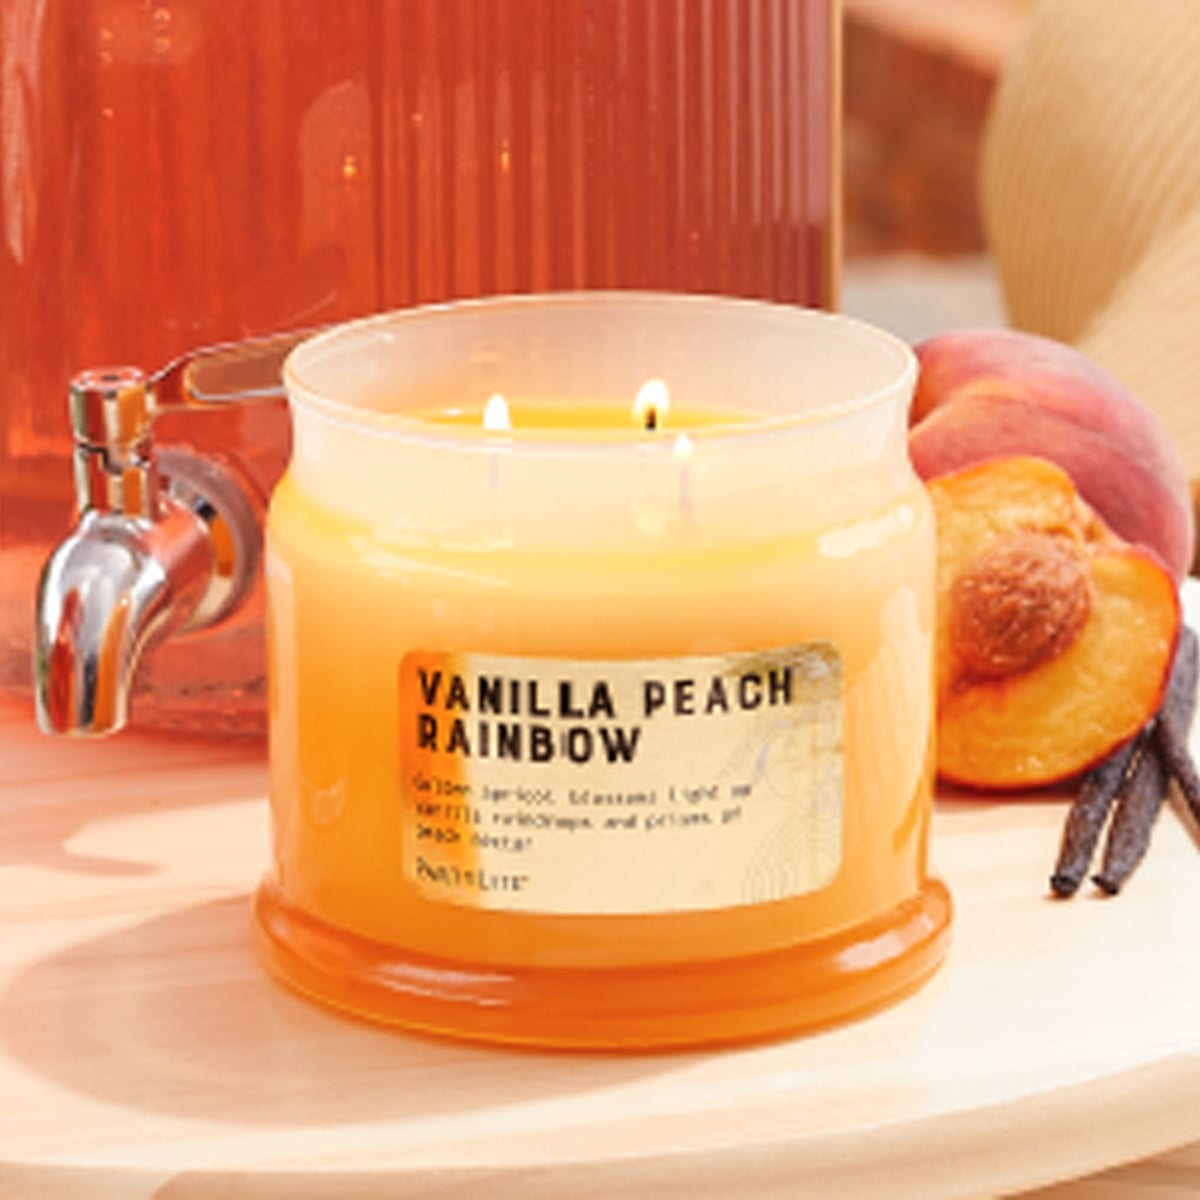 Vanilla Peach Rainbow 3-Wick Jar Candle